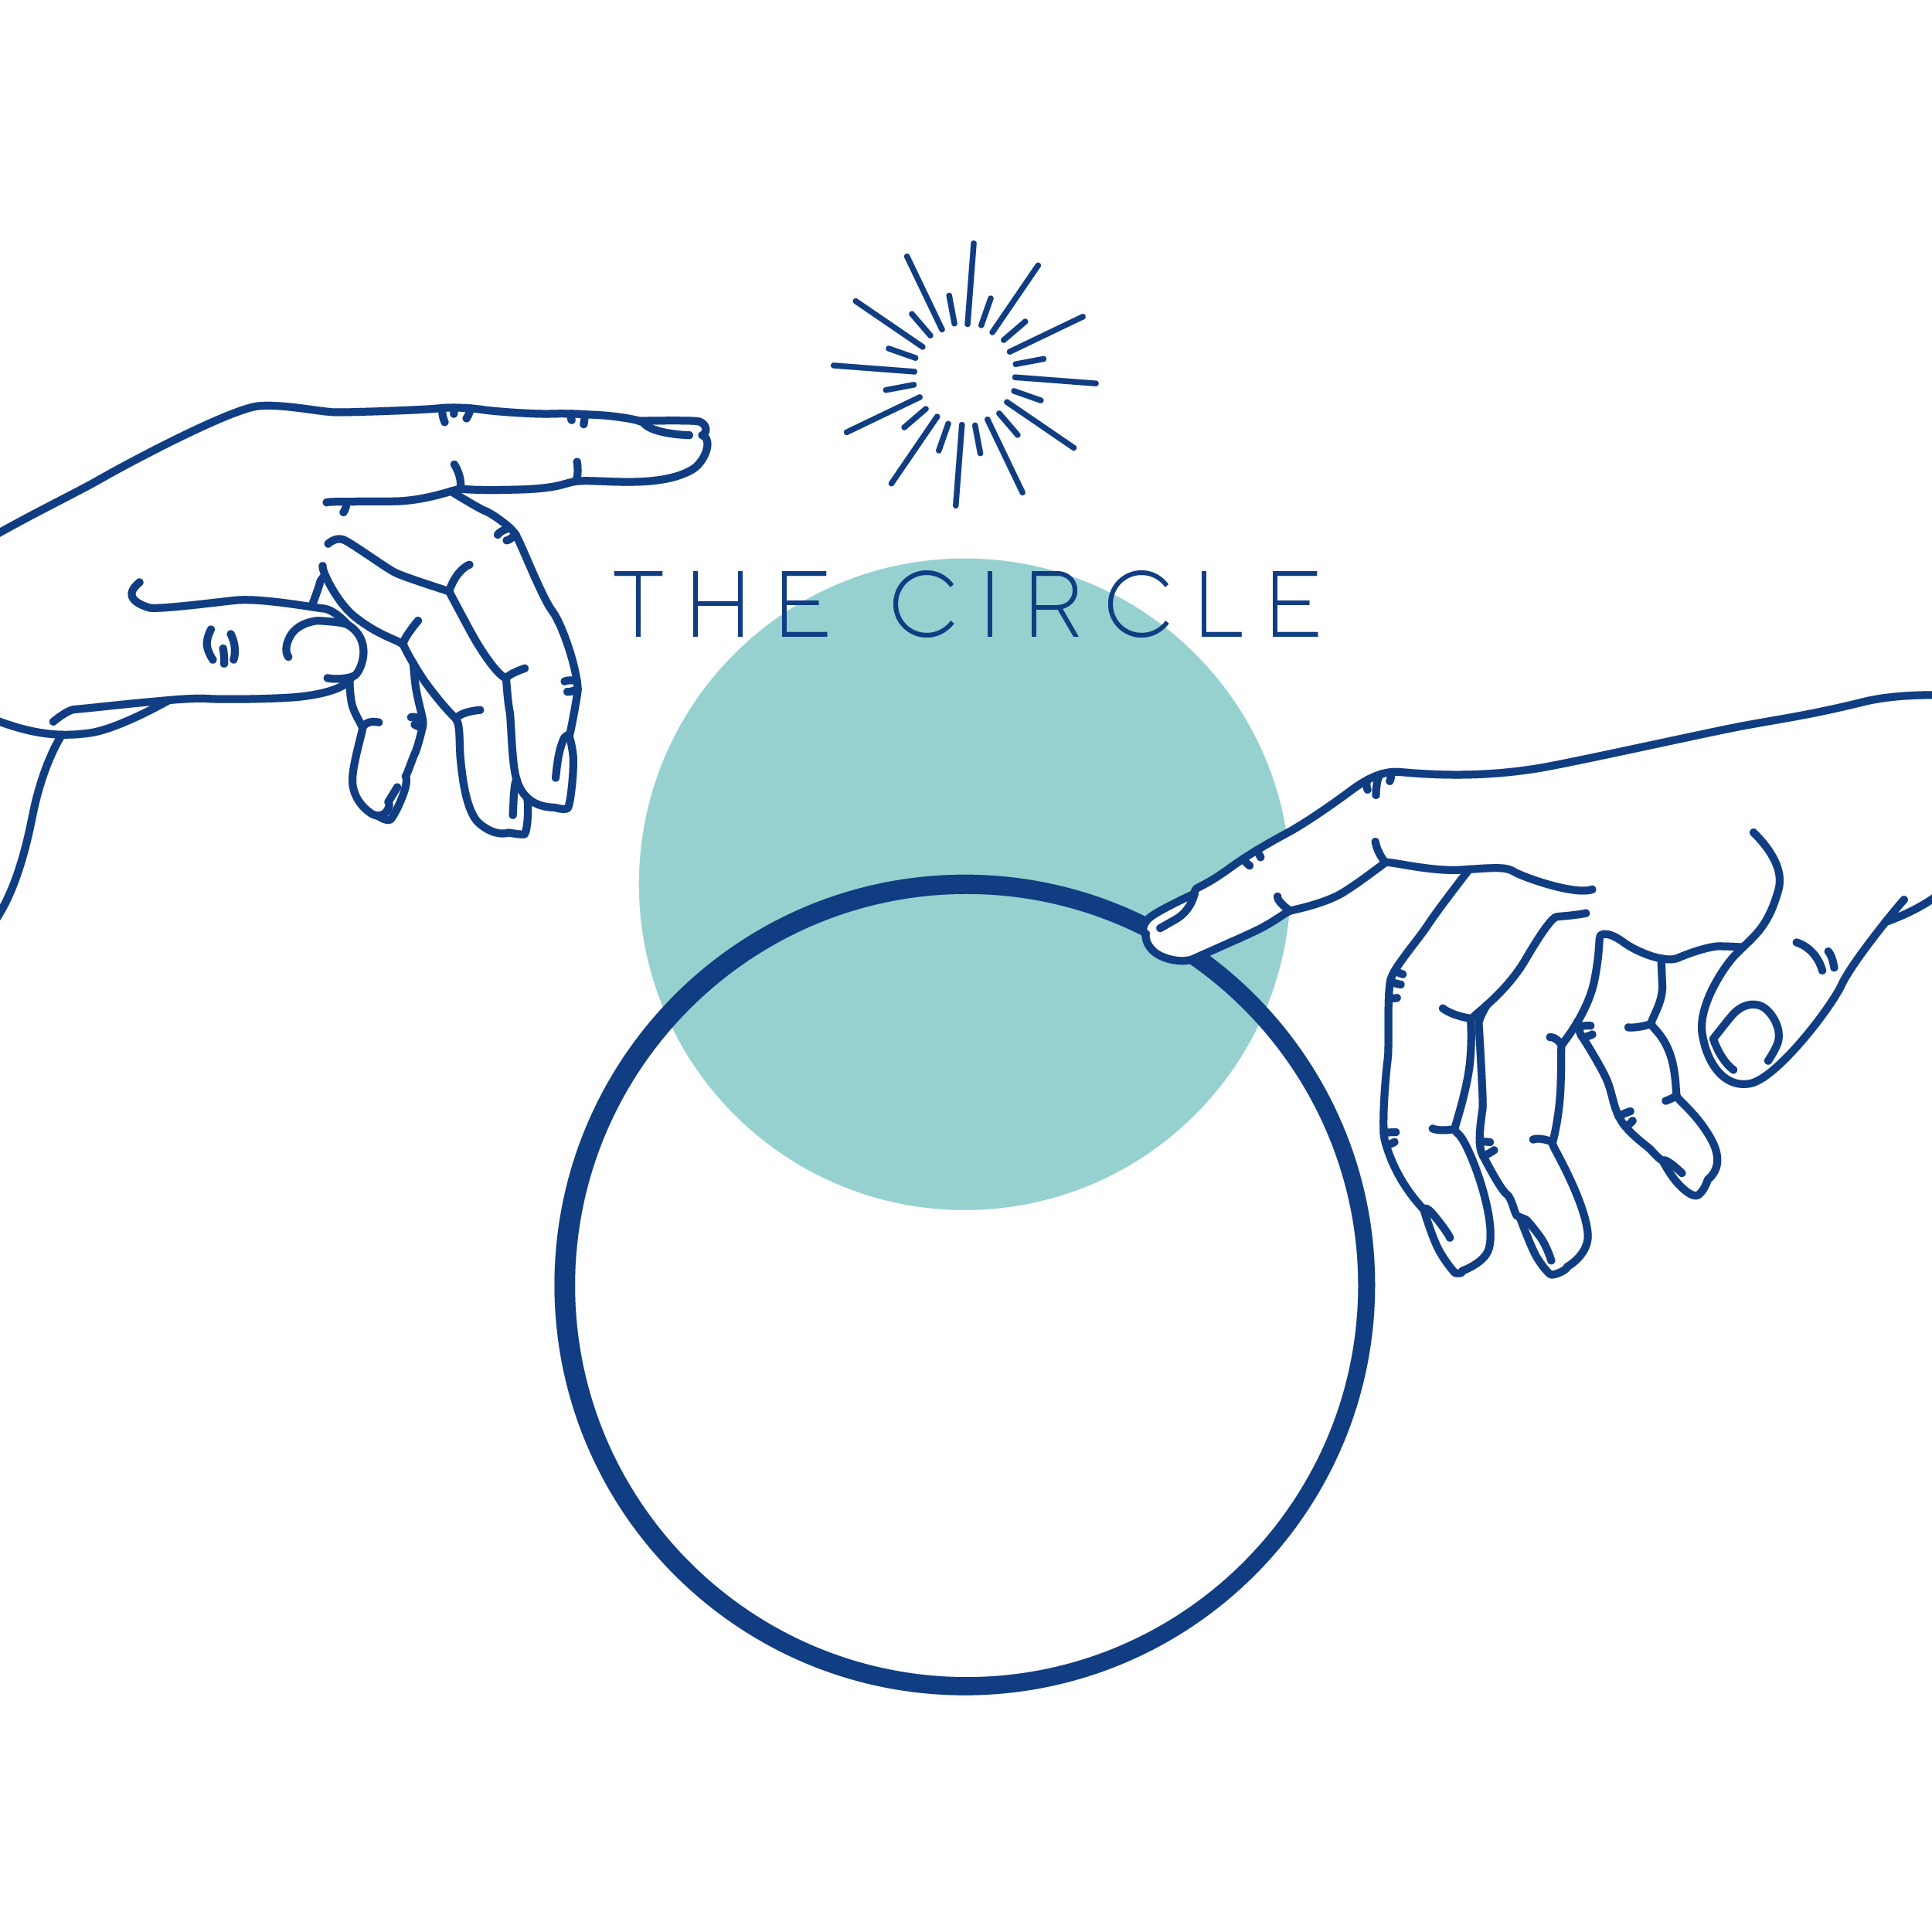 Логотип The Circle - руки, кольцо и солнце